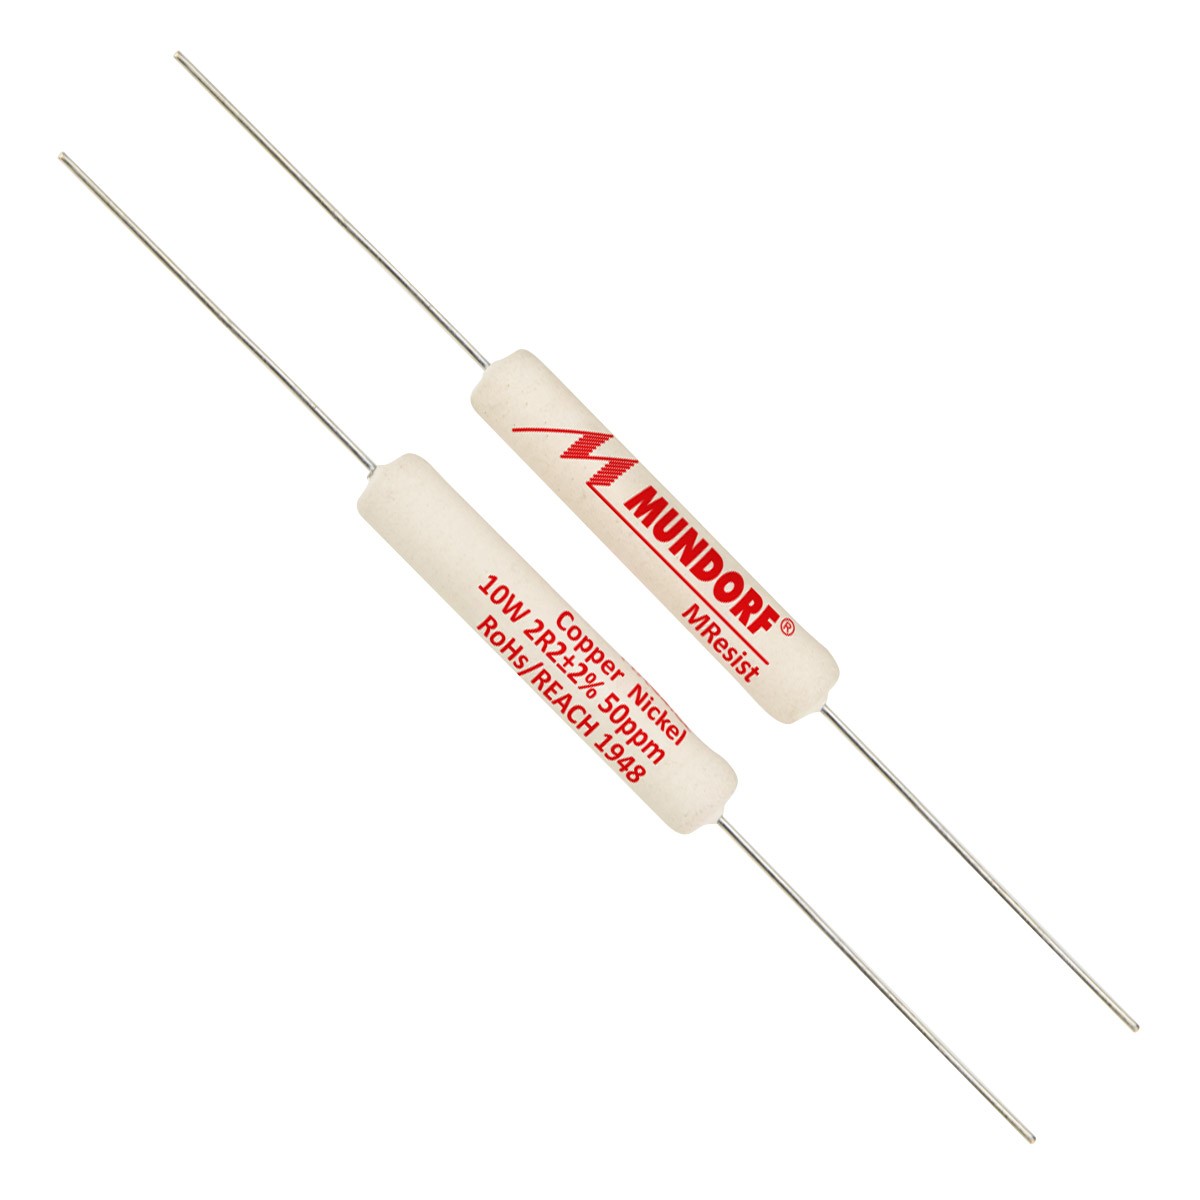 MUNDORF MRESIST CLASSIC Resistor 10W 1 Ohm